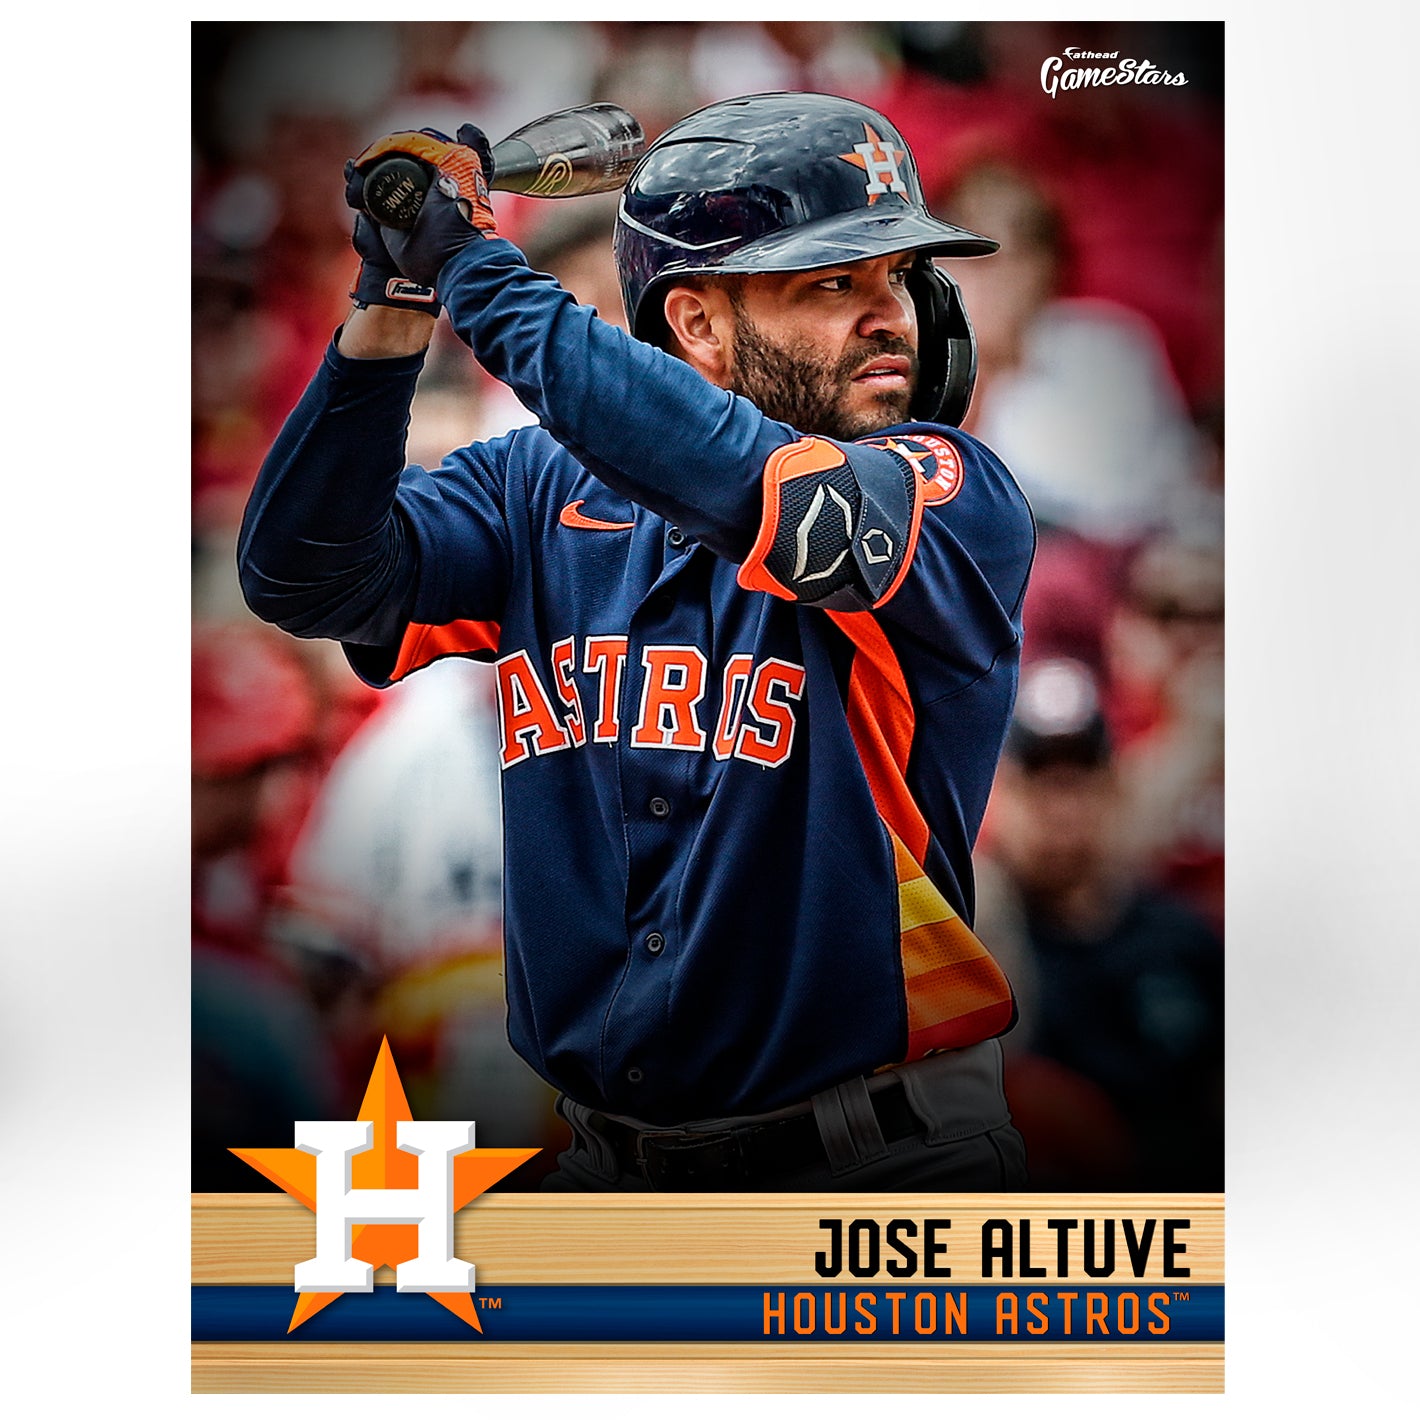 Houston Astros: Jose Altuve 2021 GameStar - Officially Licensed